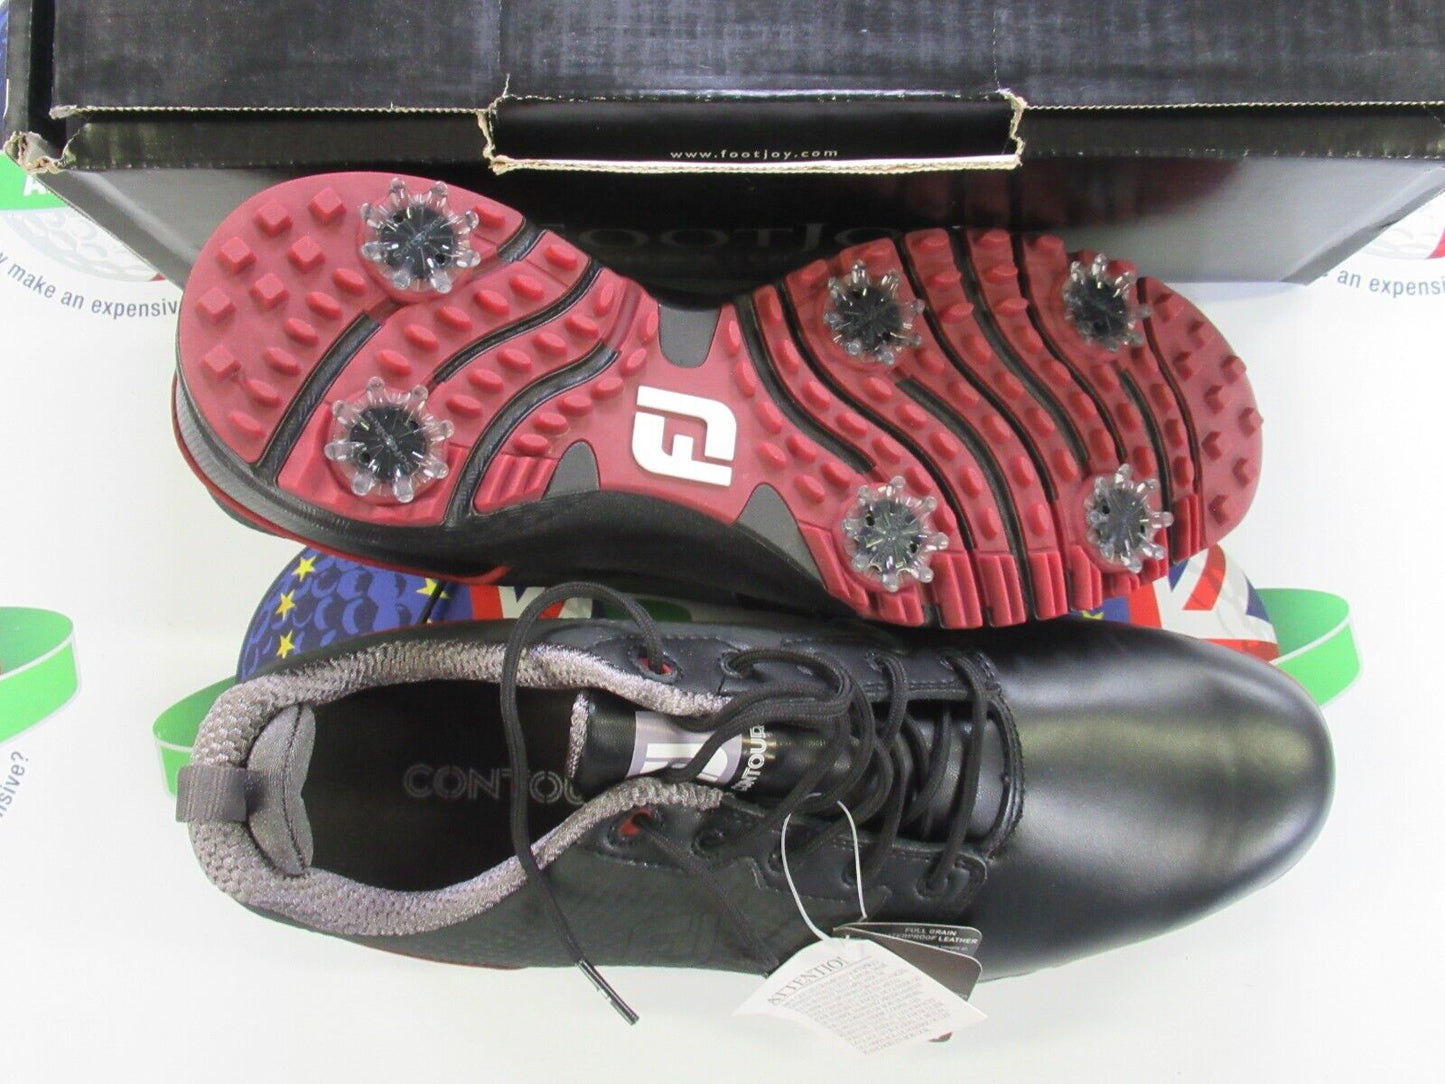 footjoy contour fit golf shoes 54164k black/scarlet uk size 9 medium